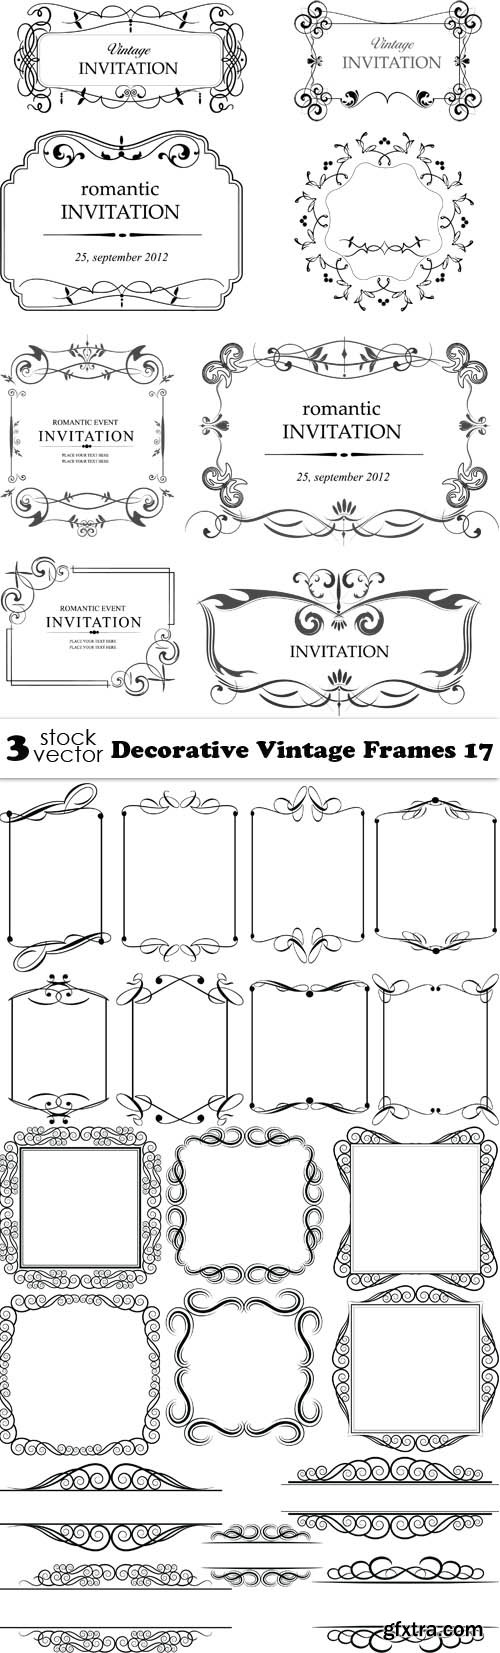 Vectors - Decorative Vintage Frames 17